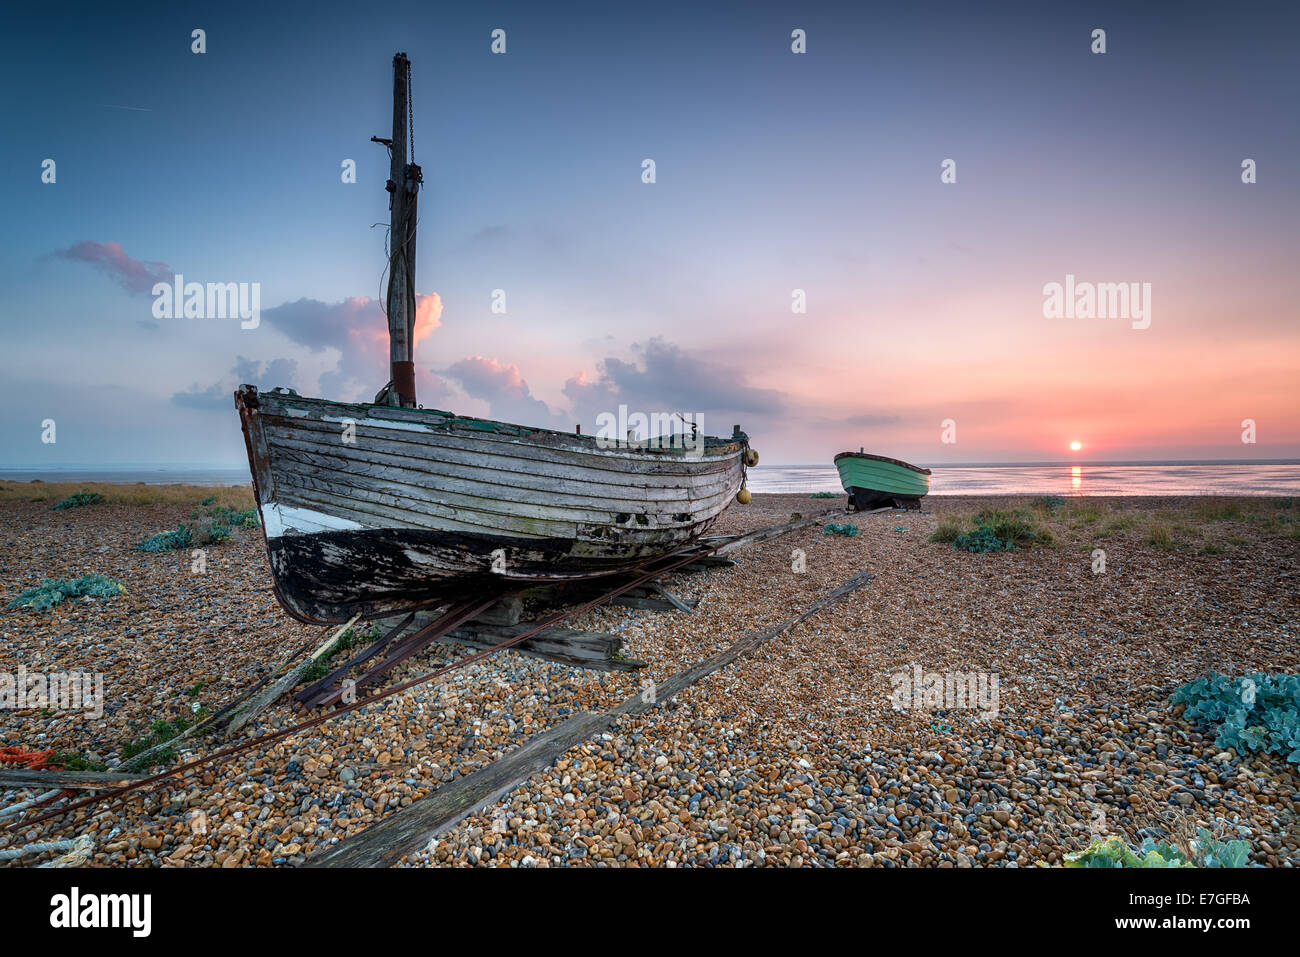 Beautiful sunrise over old wooden boats on a shingle beach Stock Photo